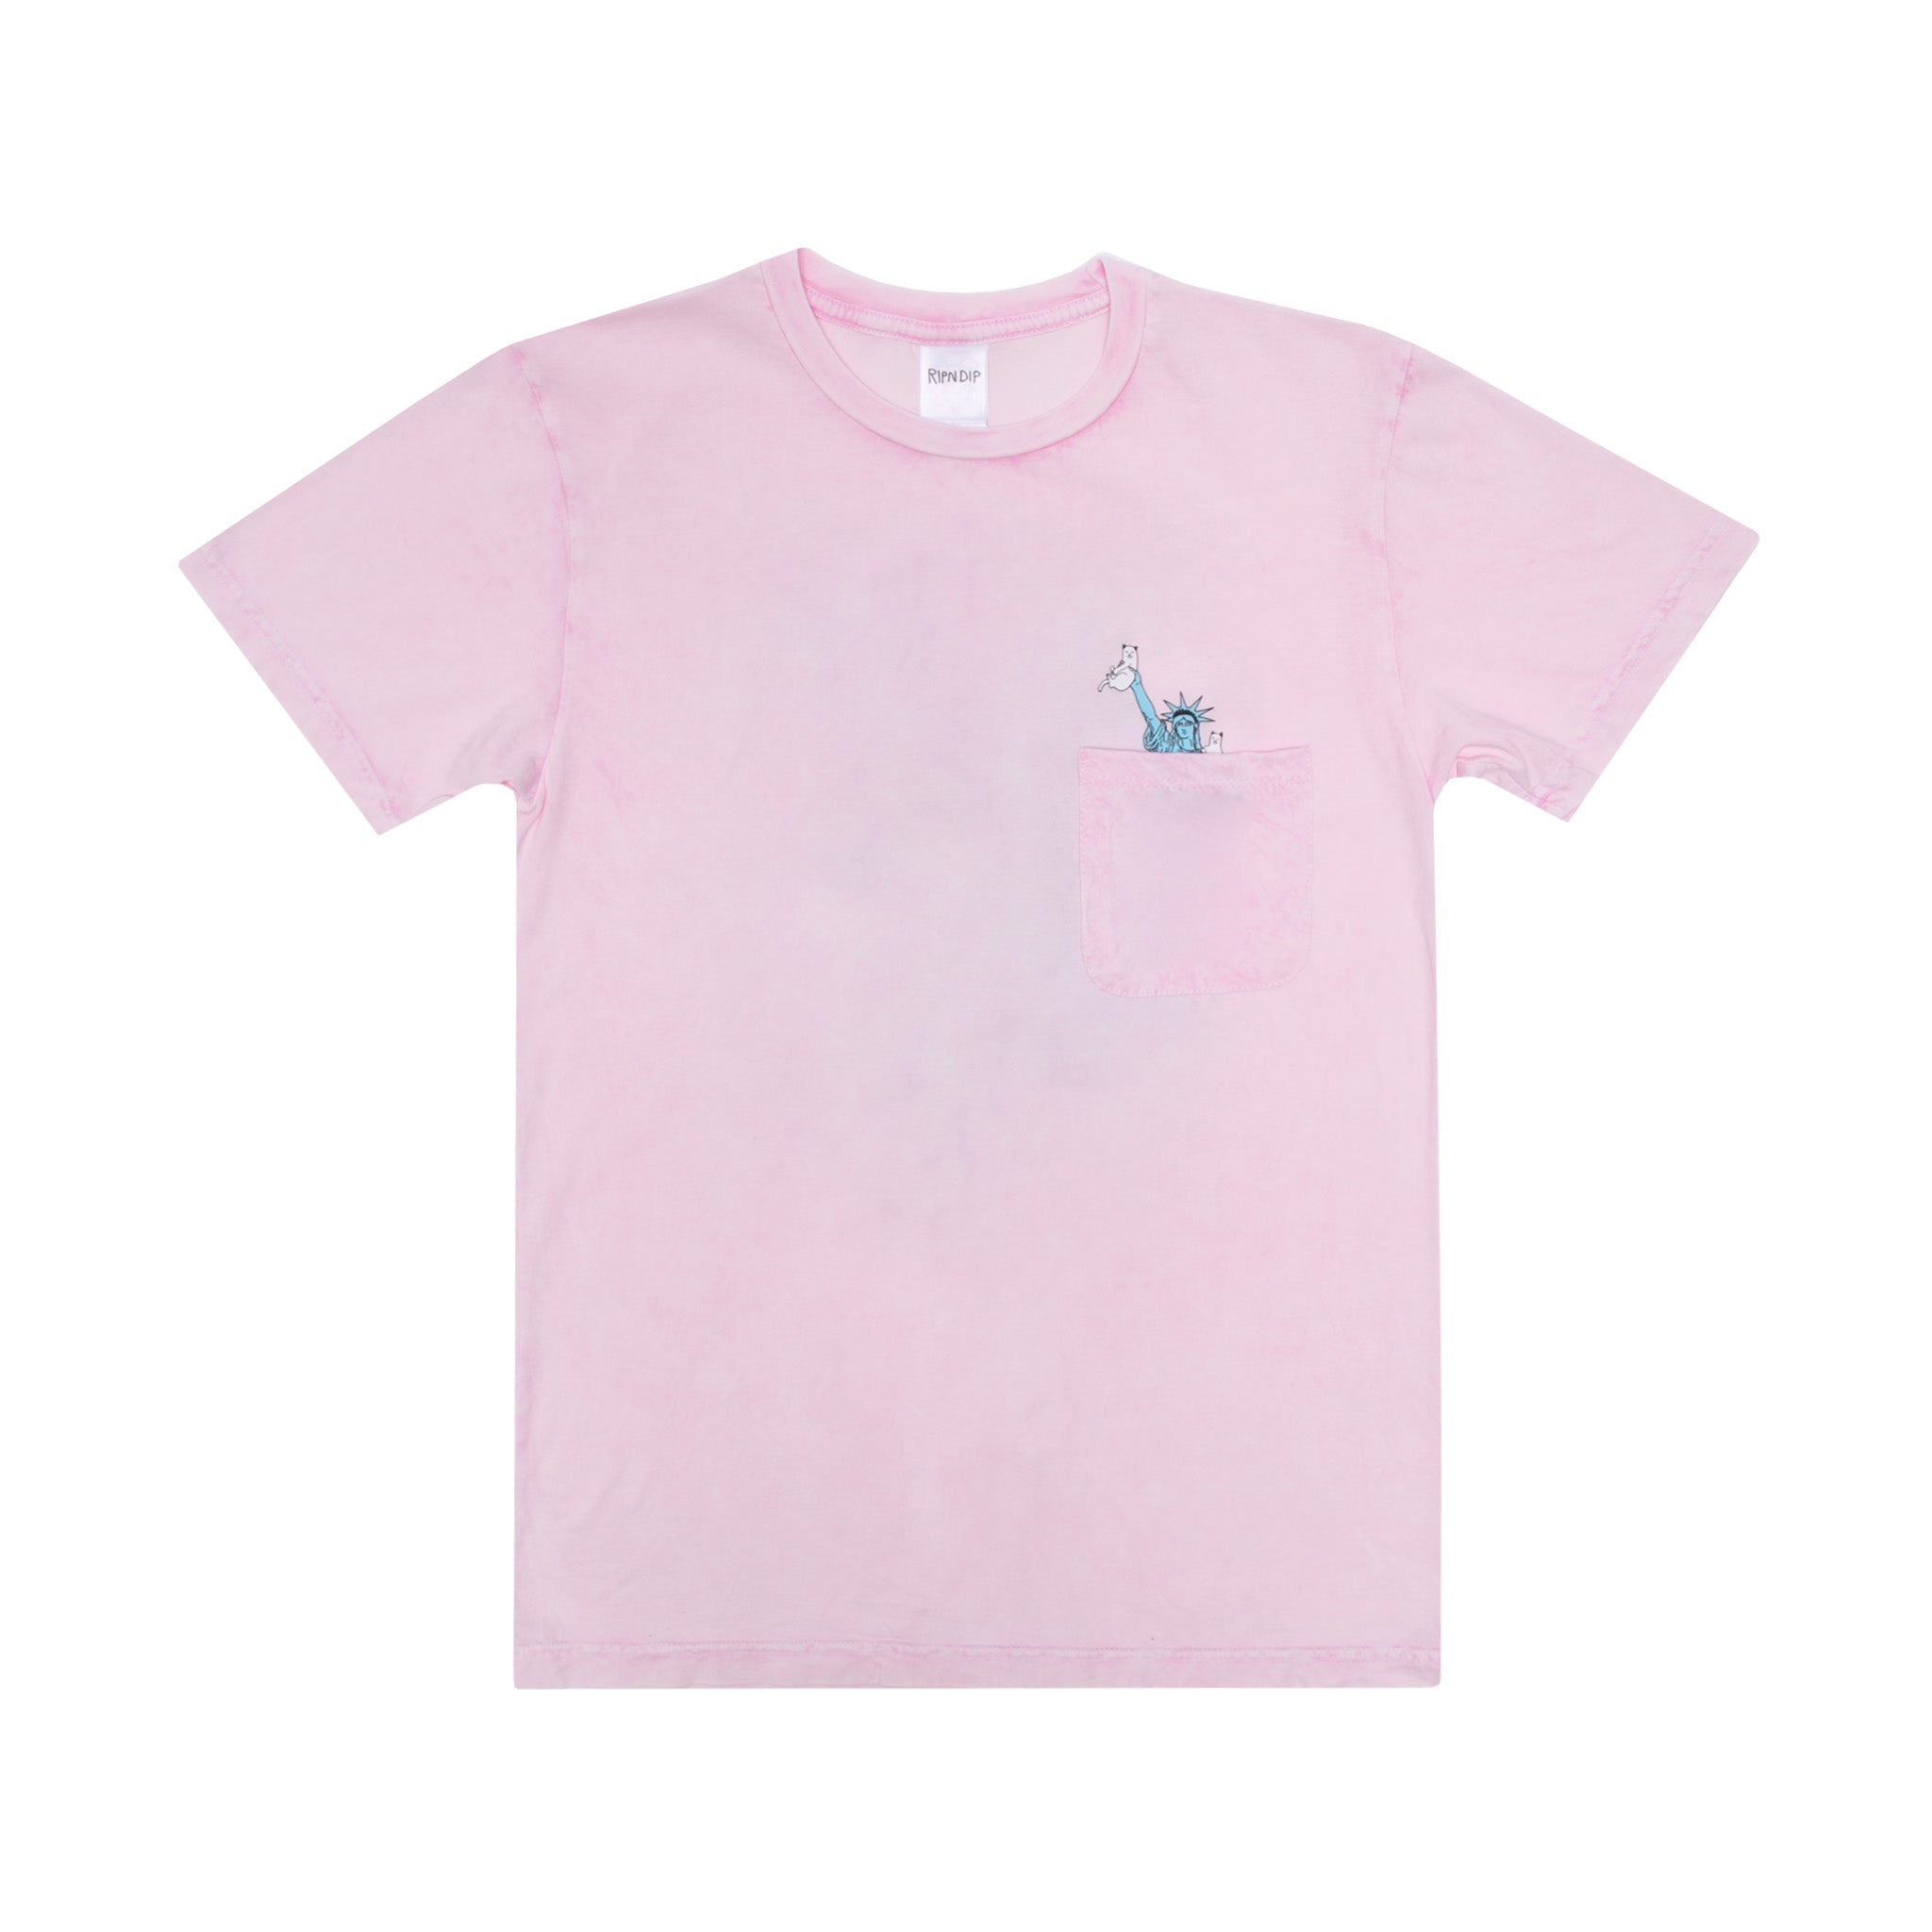 293142 Liberty Tee (Pink Mineral Wash)